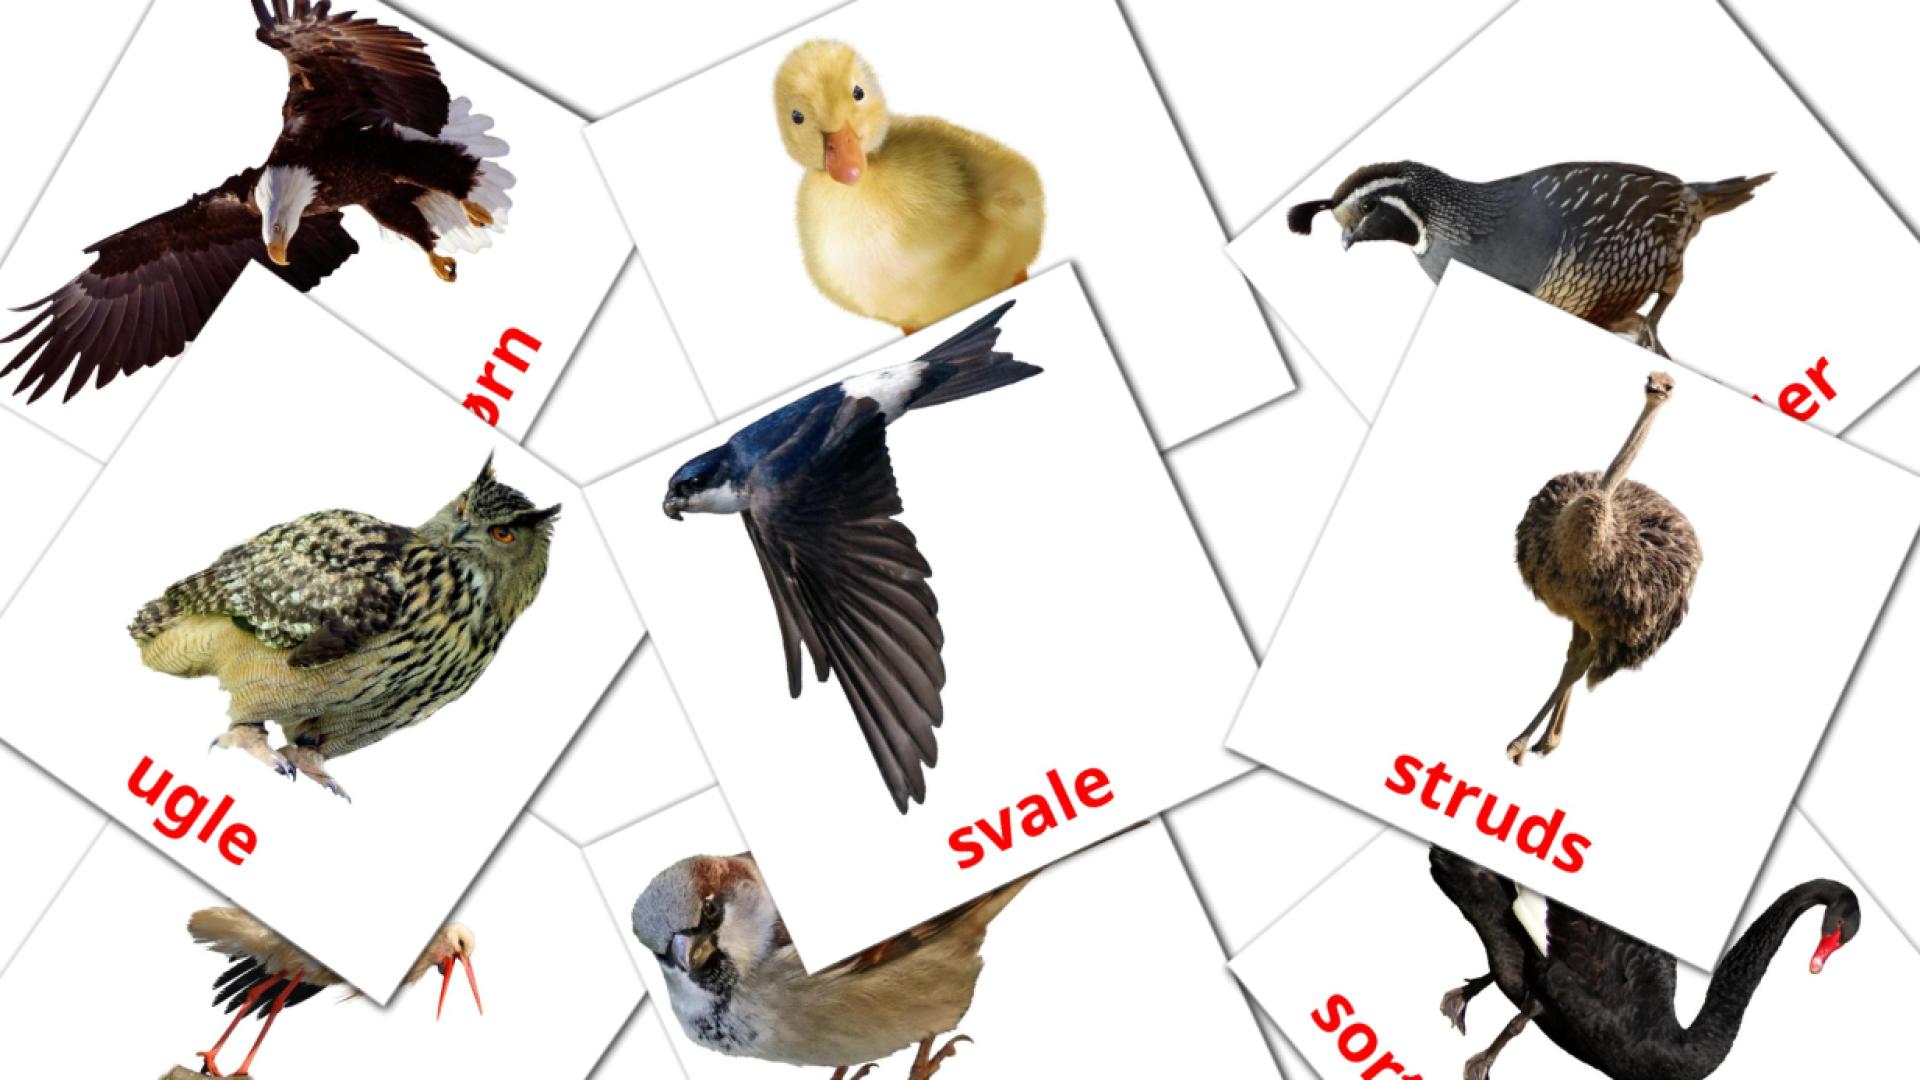 Fugle dansk vocabulary flashcards